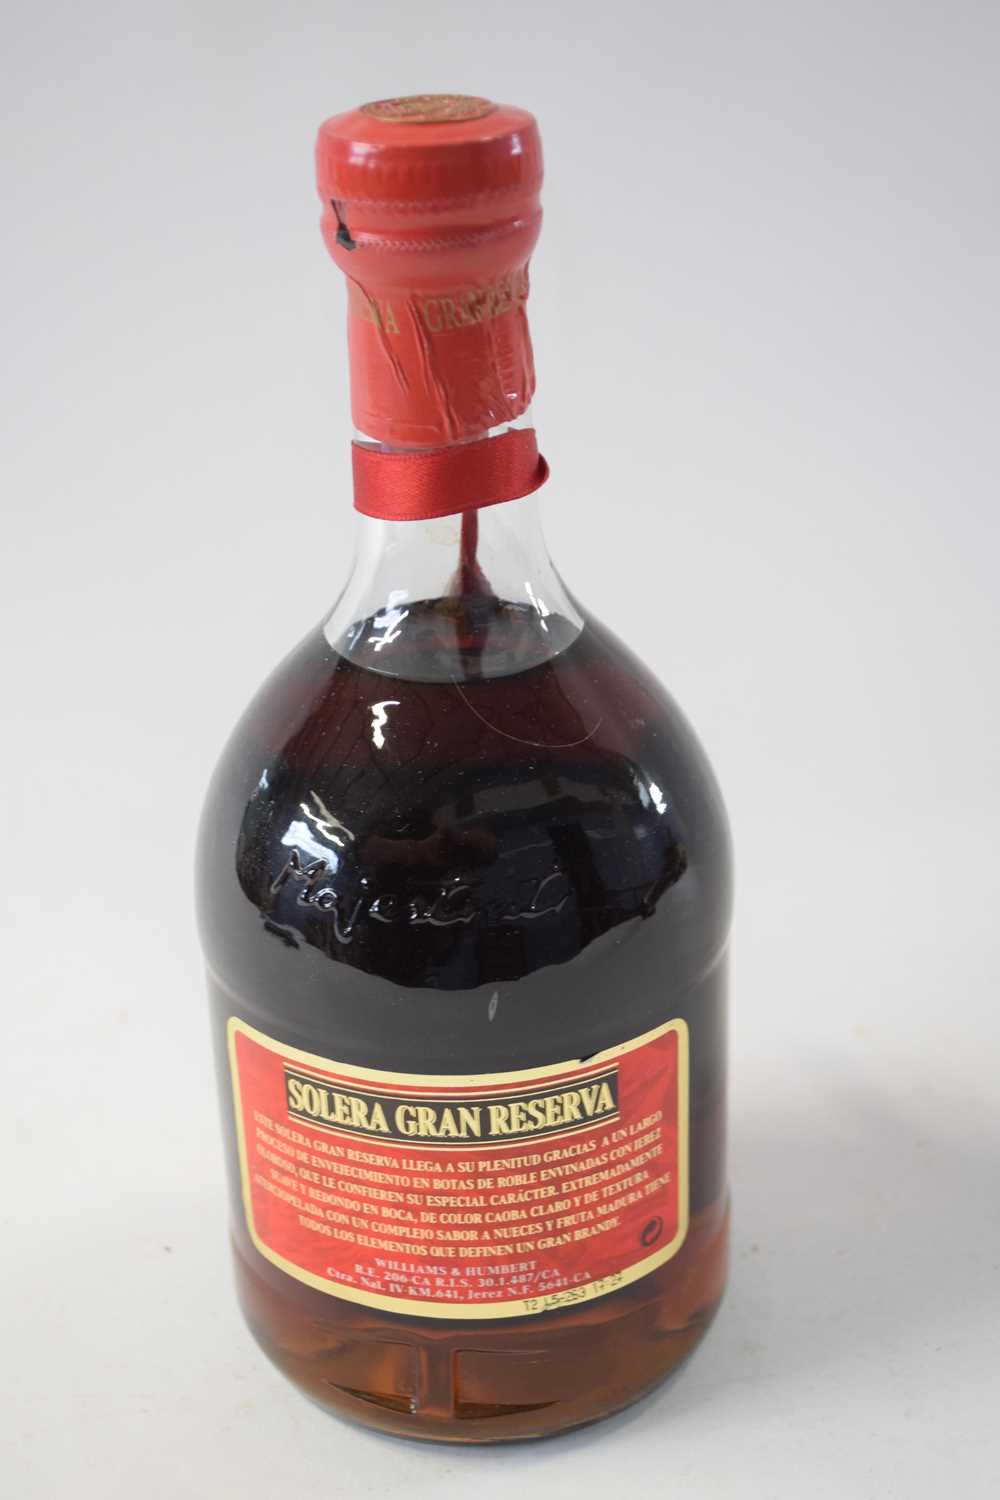 Majestat 10 year old Grand Reserva Brandy, 1 bottle - Image 2 of 2